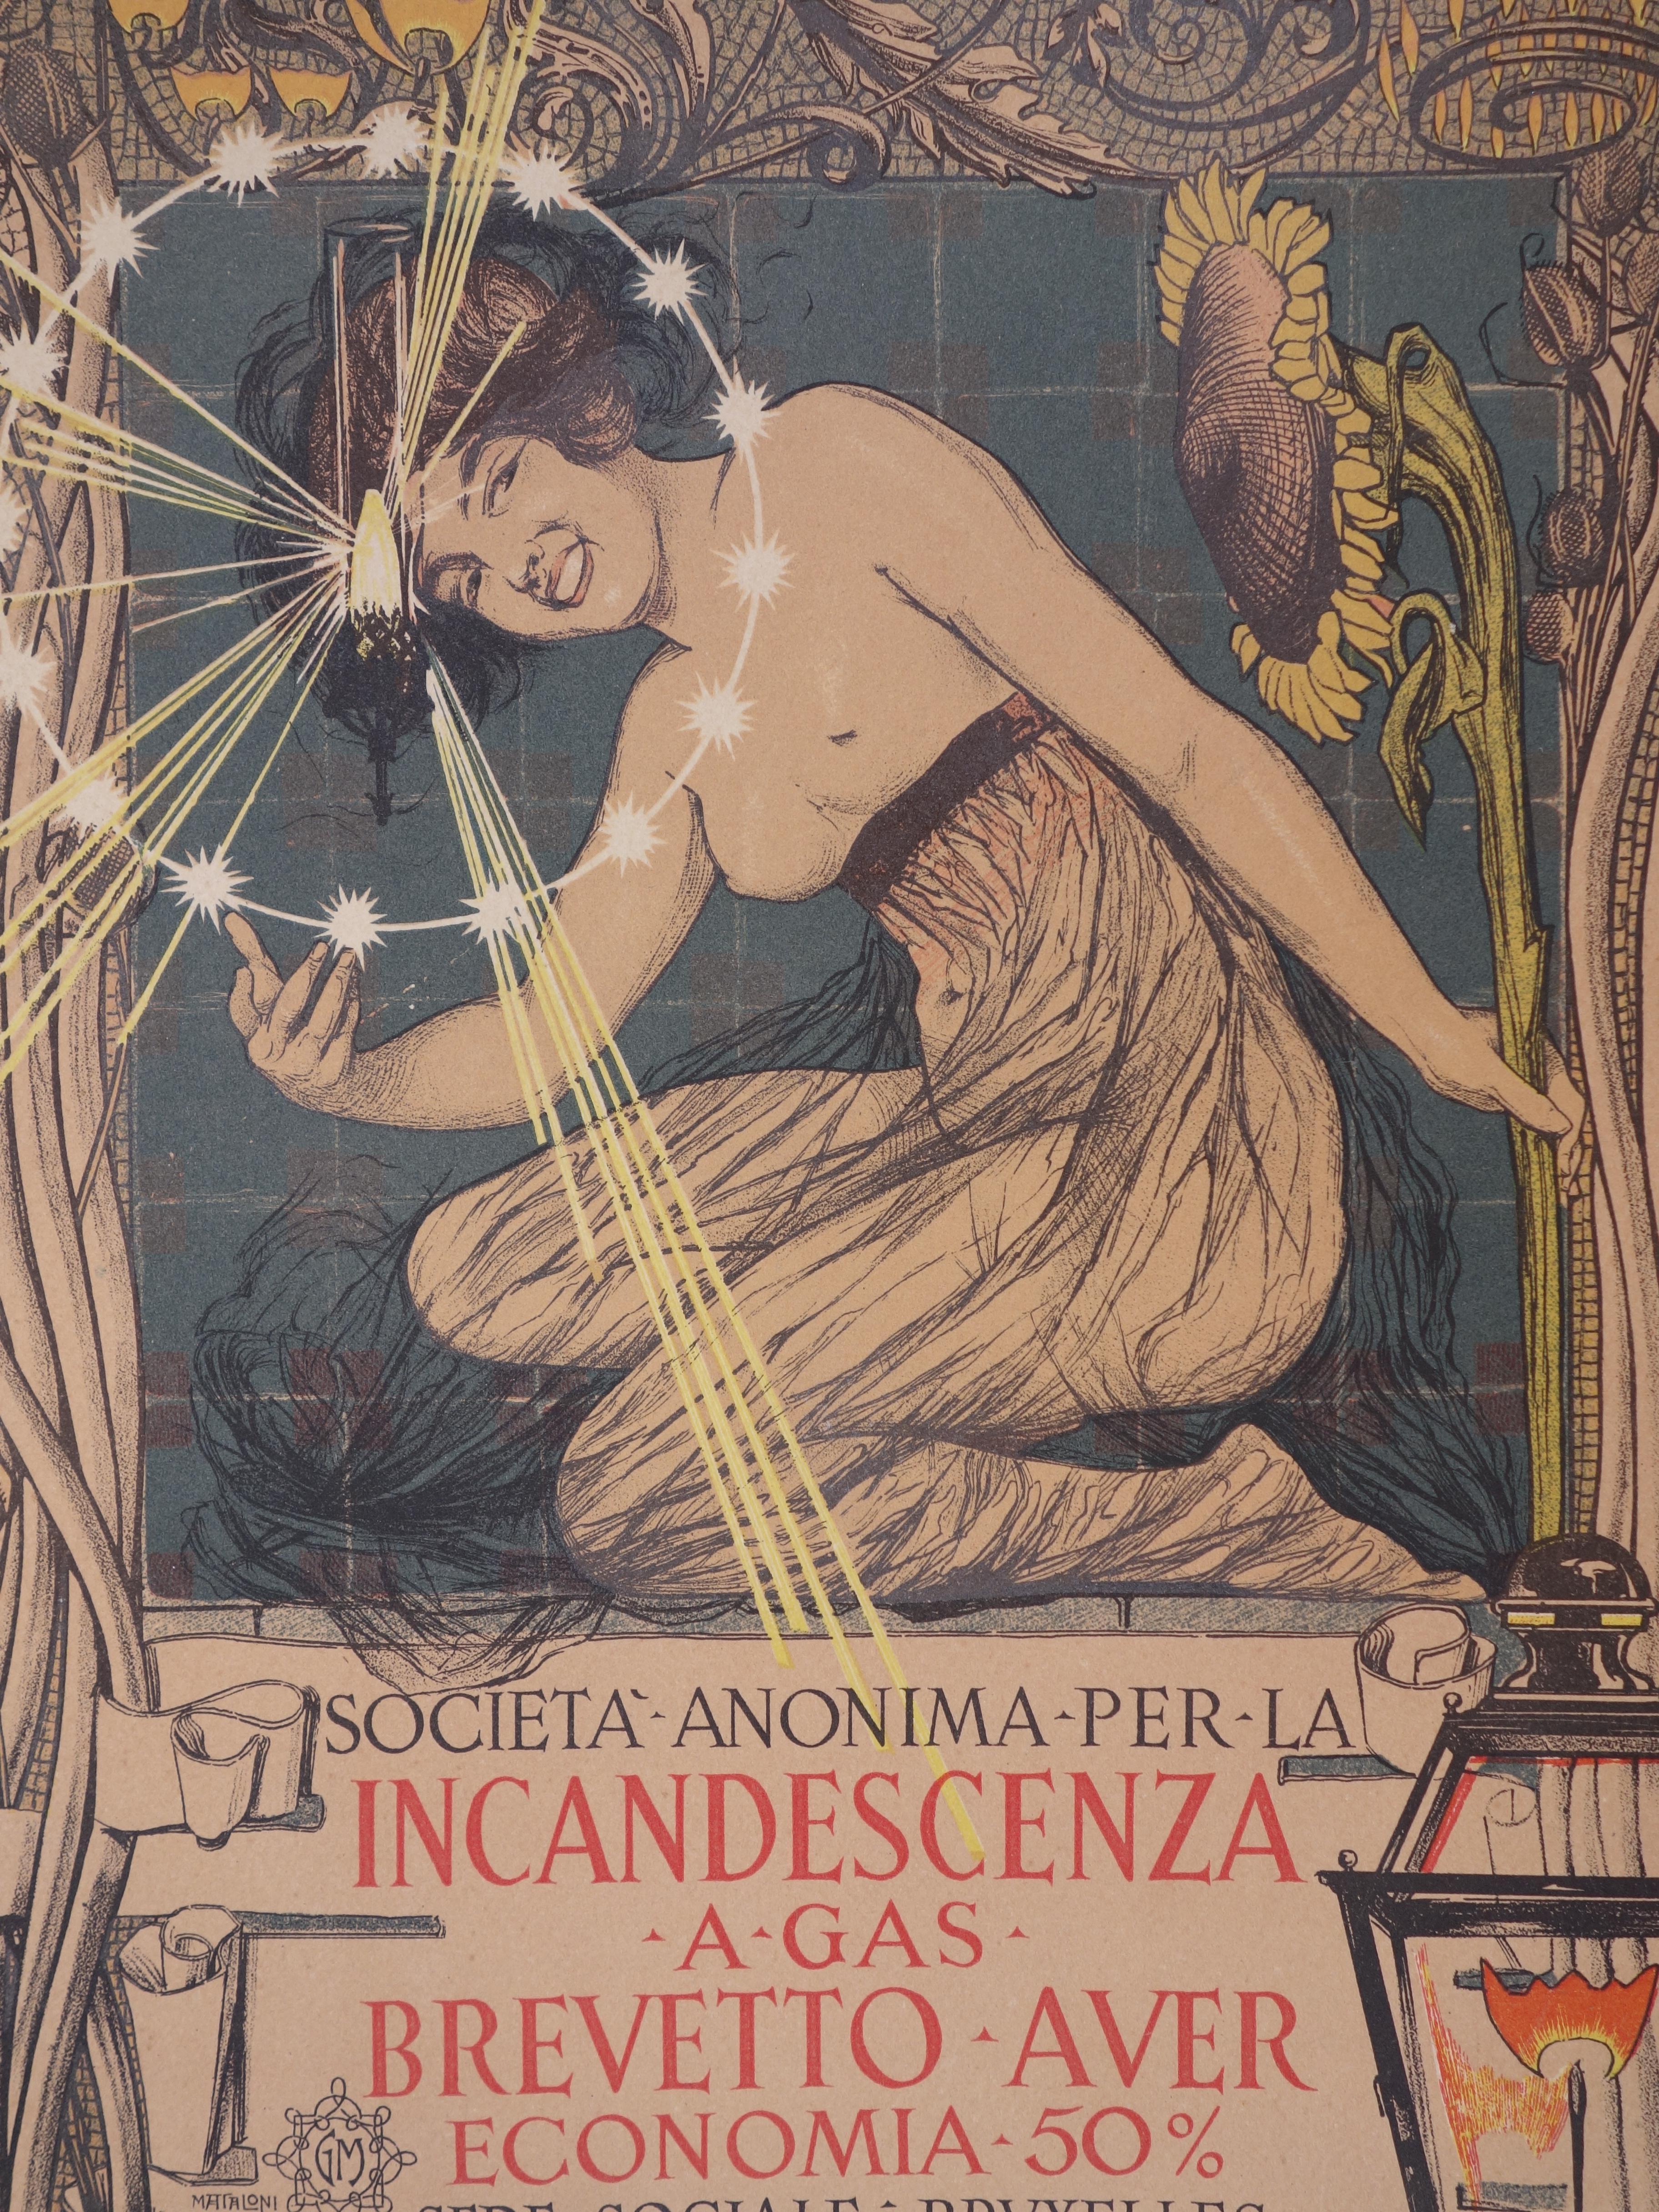 Incandescence - Lithograph, 1897 - Art Nouveau Print by Giovanni Mataloni